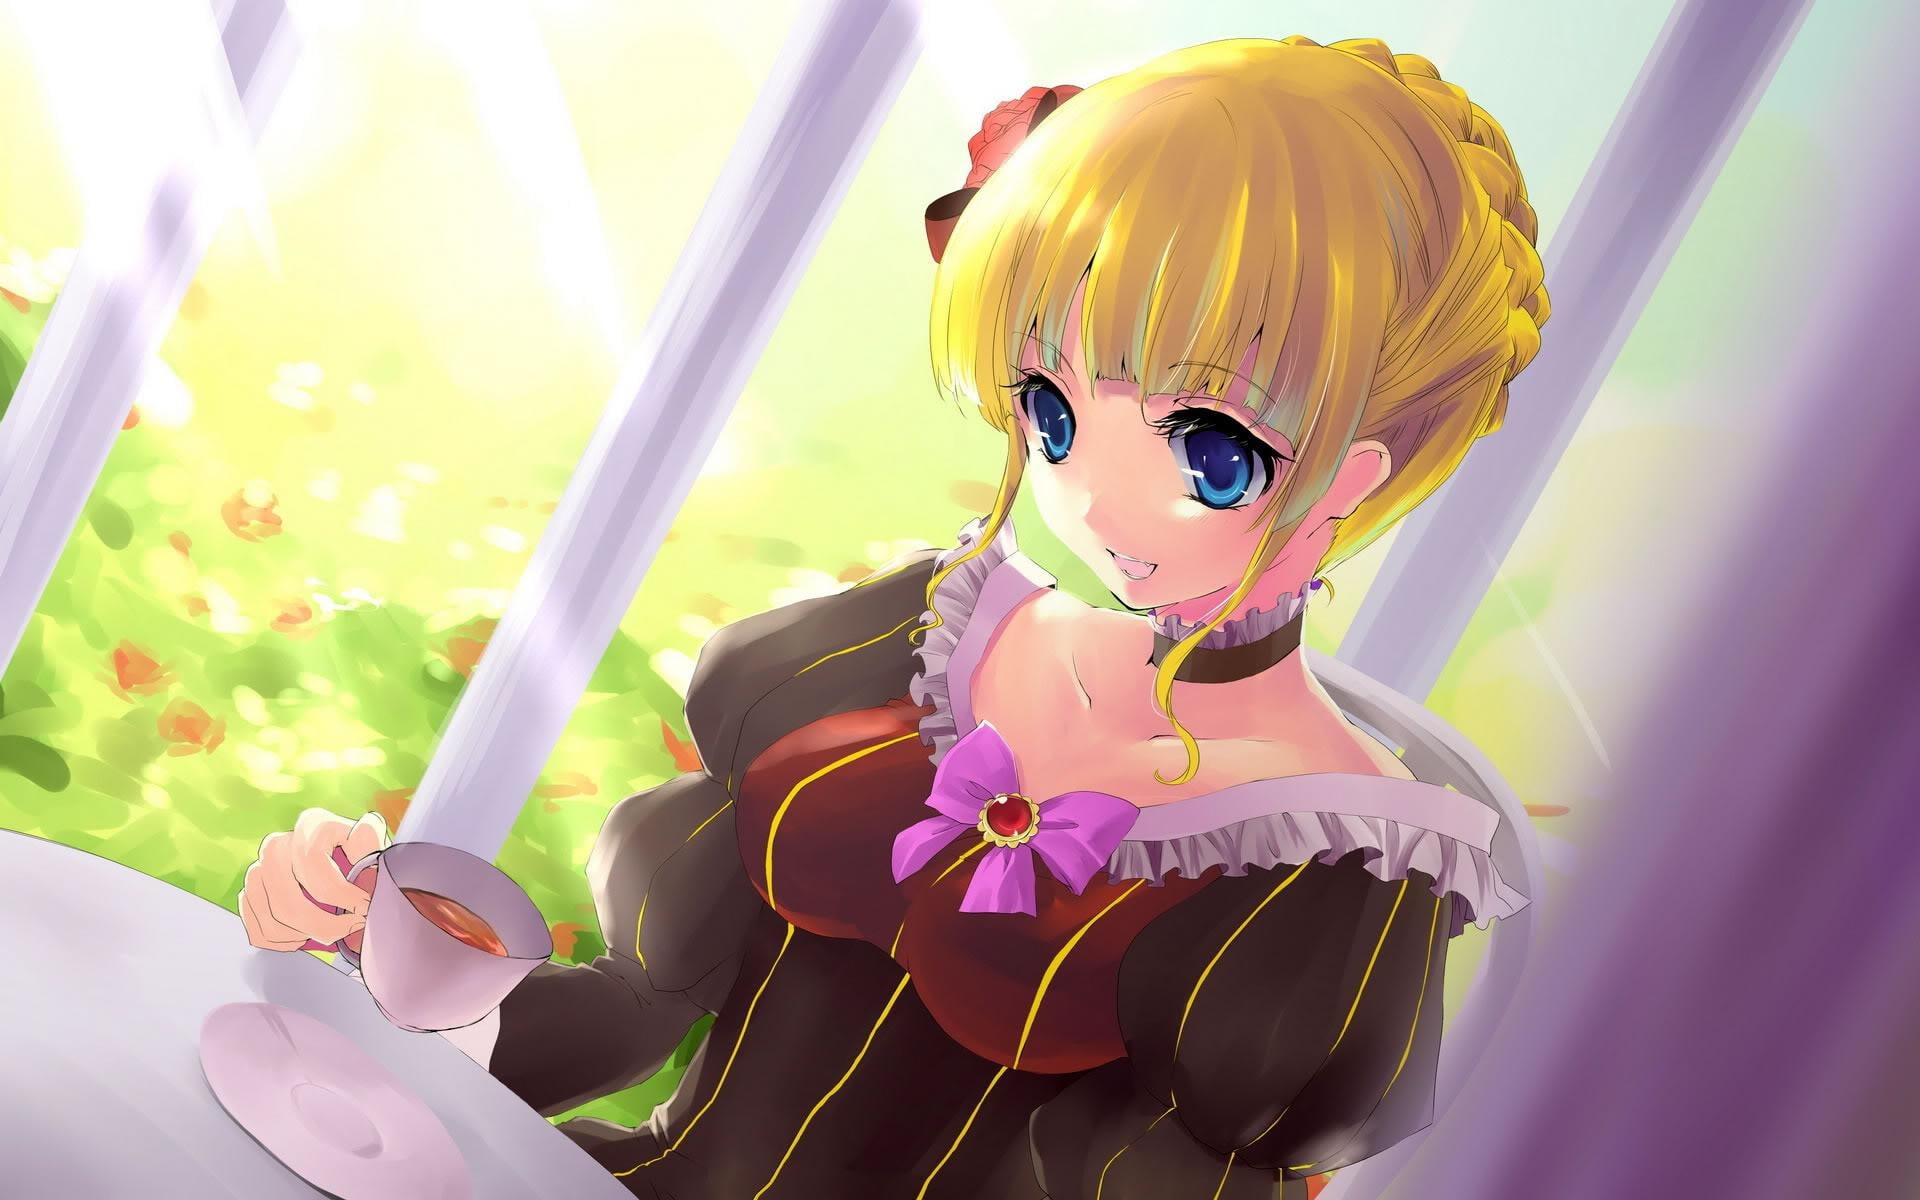 female anime character with yellow hair holding mug